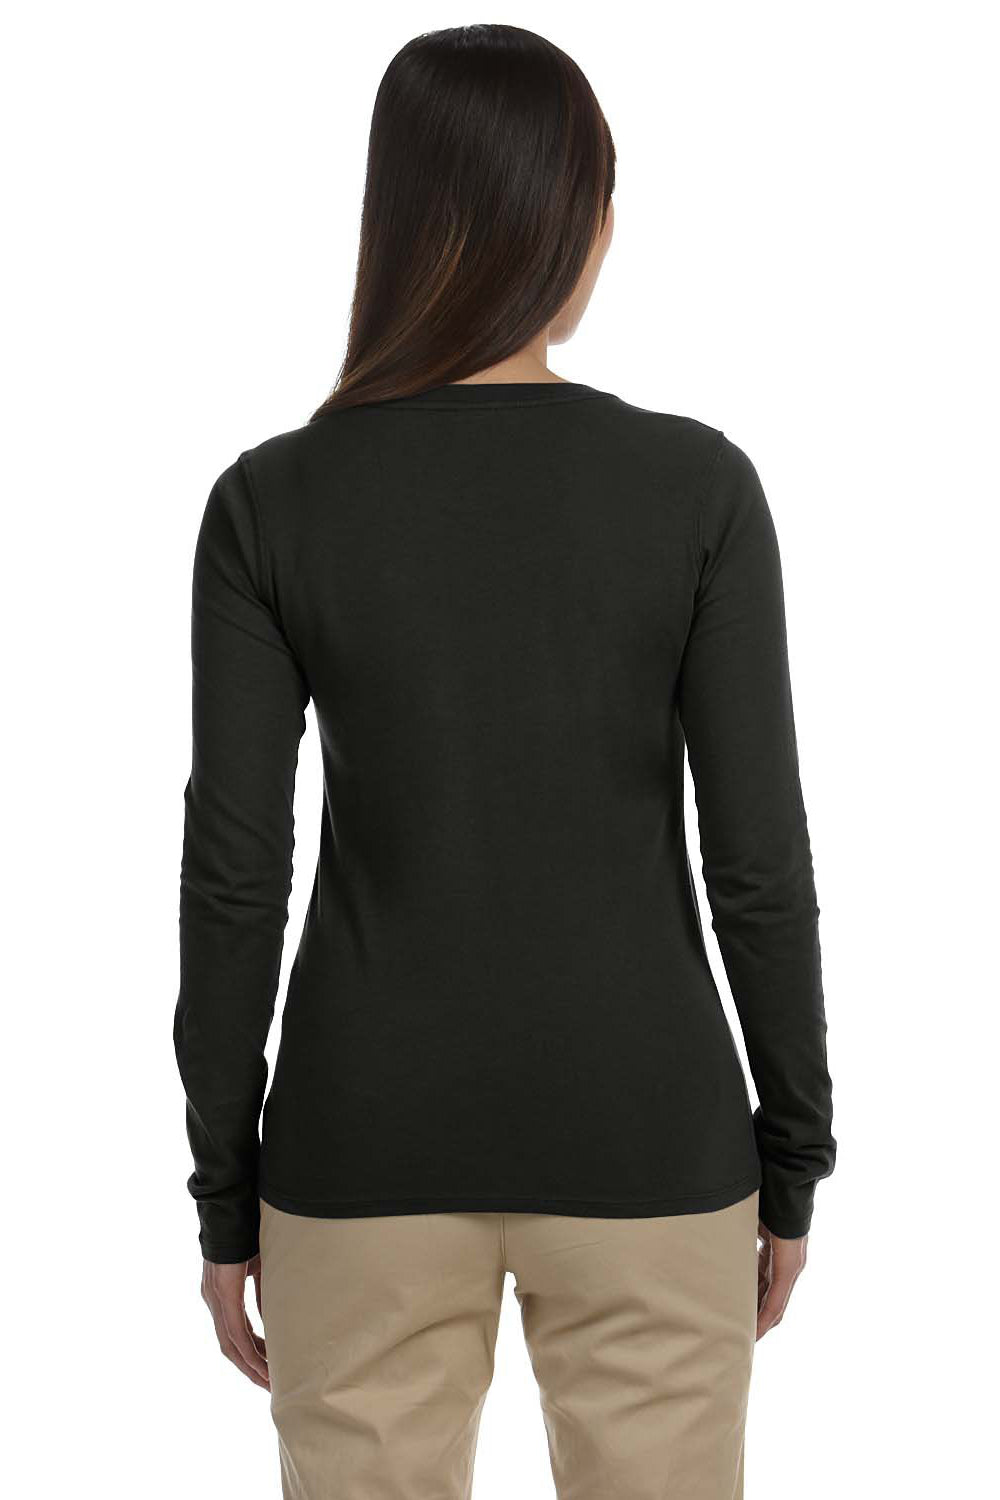 Econscious EC3500 Womens Long Sleeve Crewneck T-Shirt Black Back